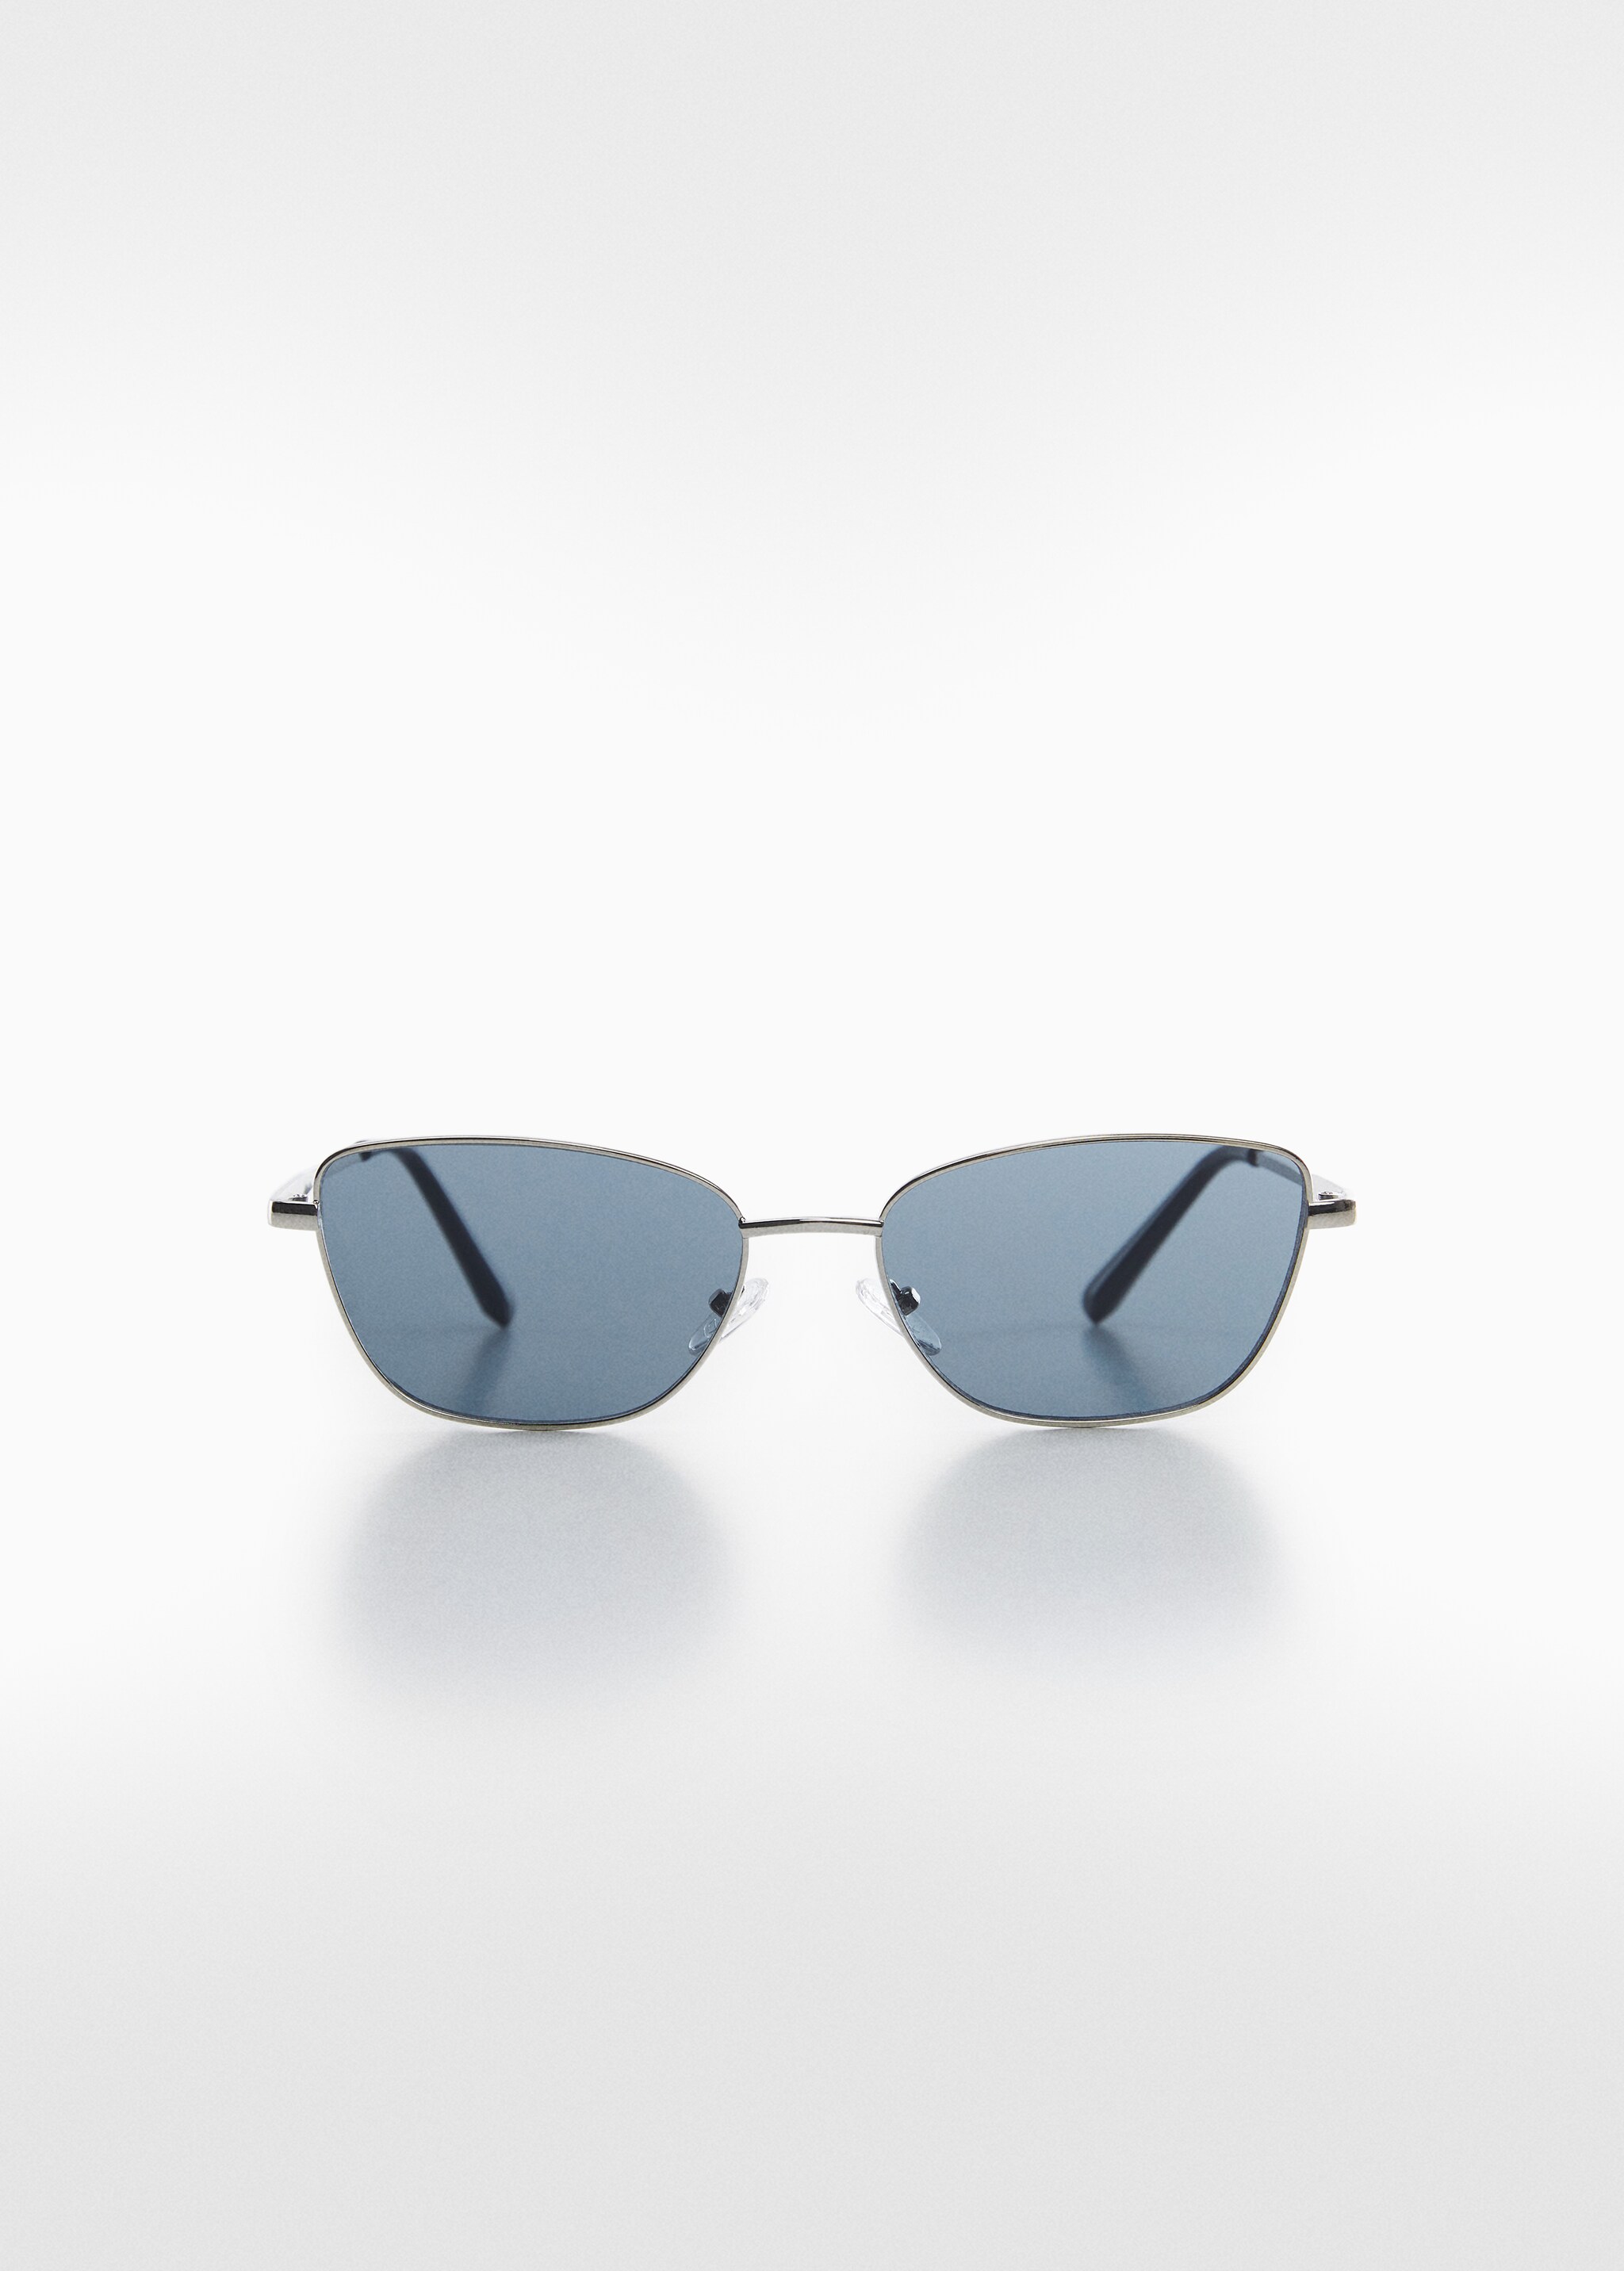 Metal bridge sunglasses - Article without model